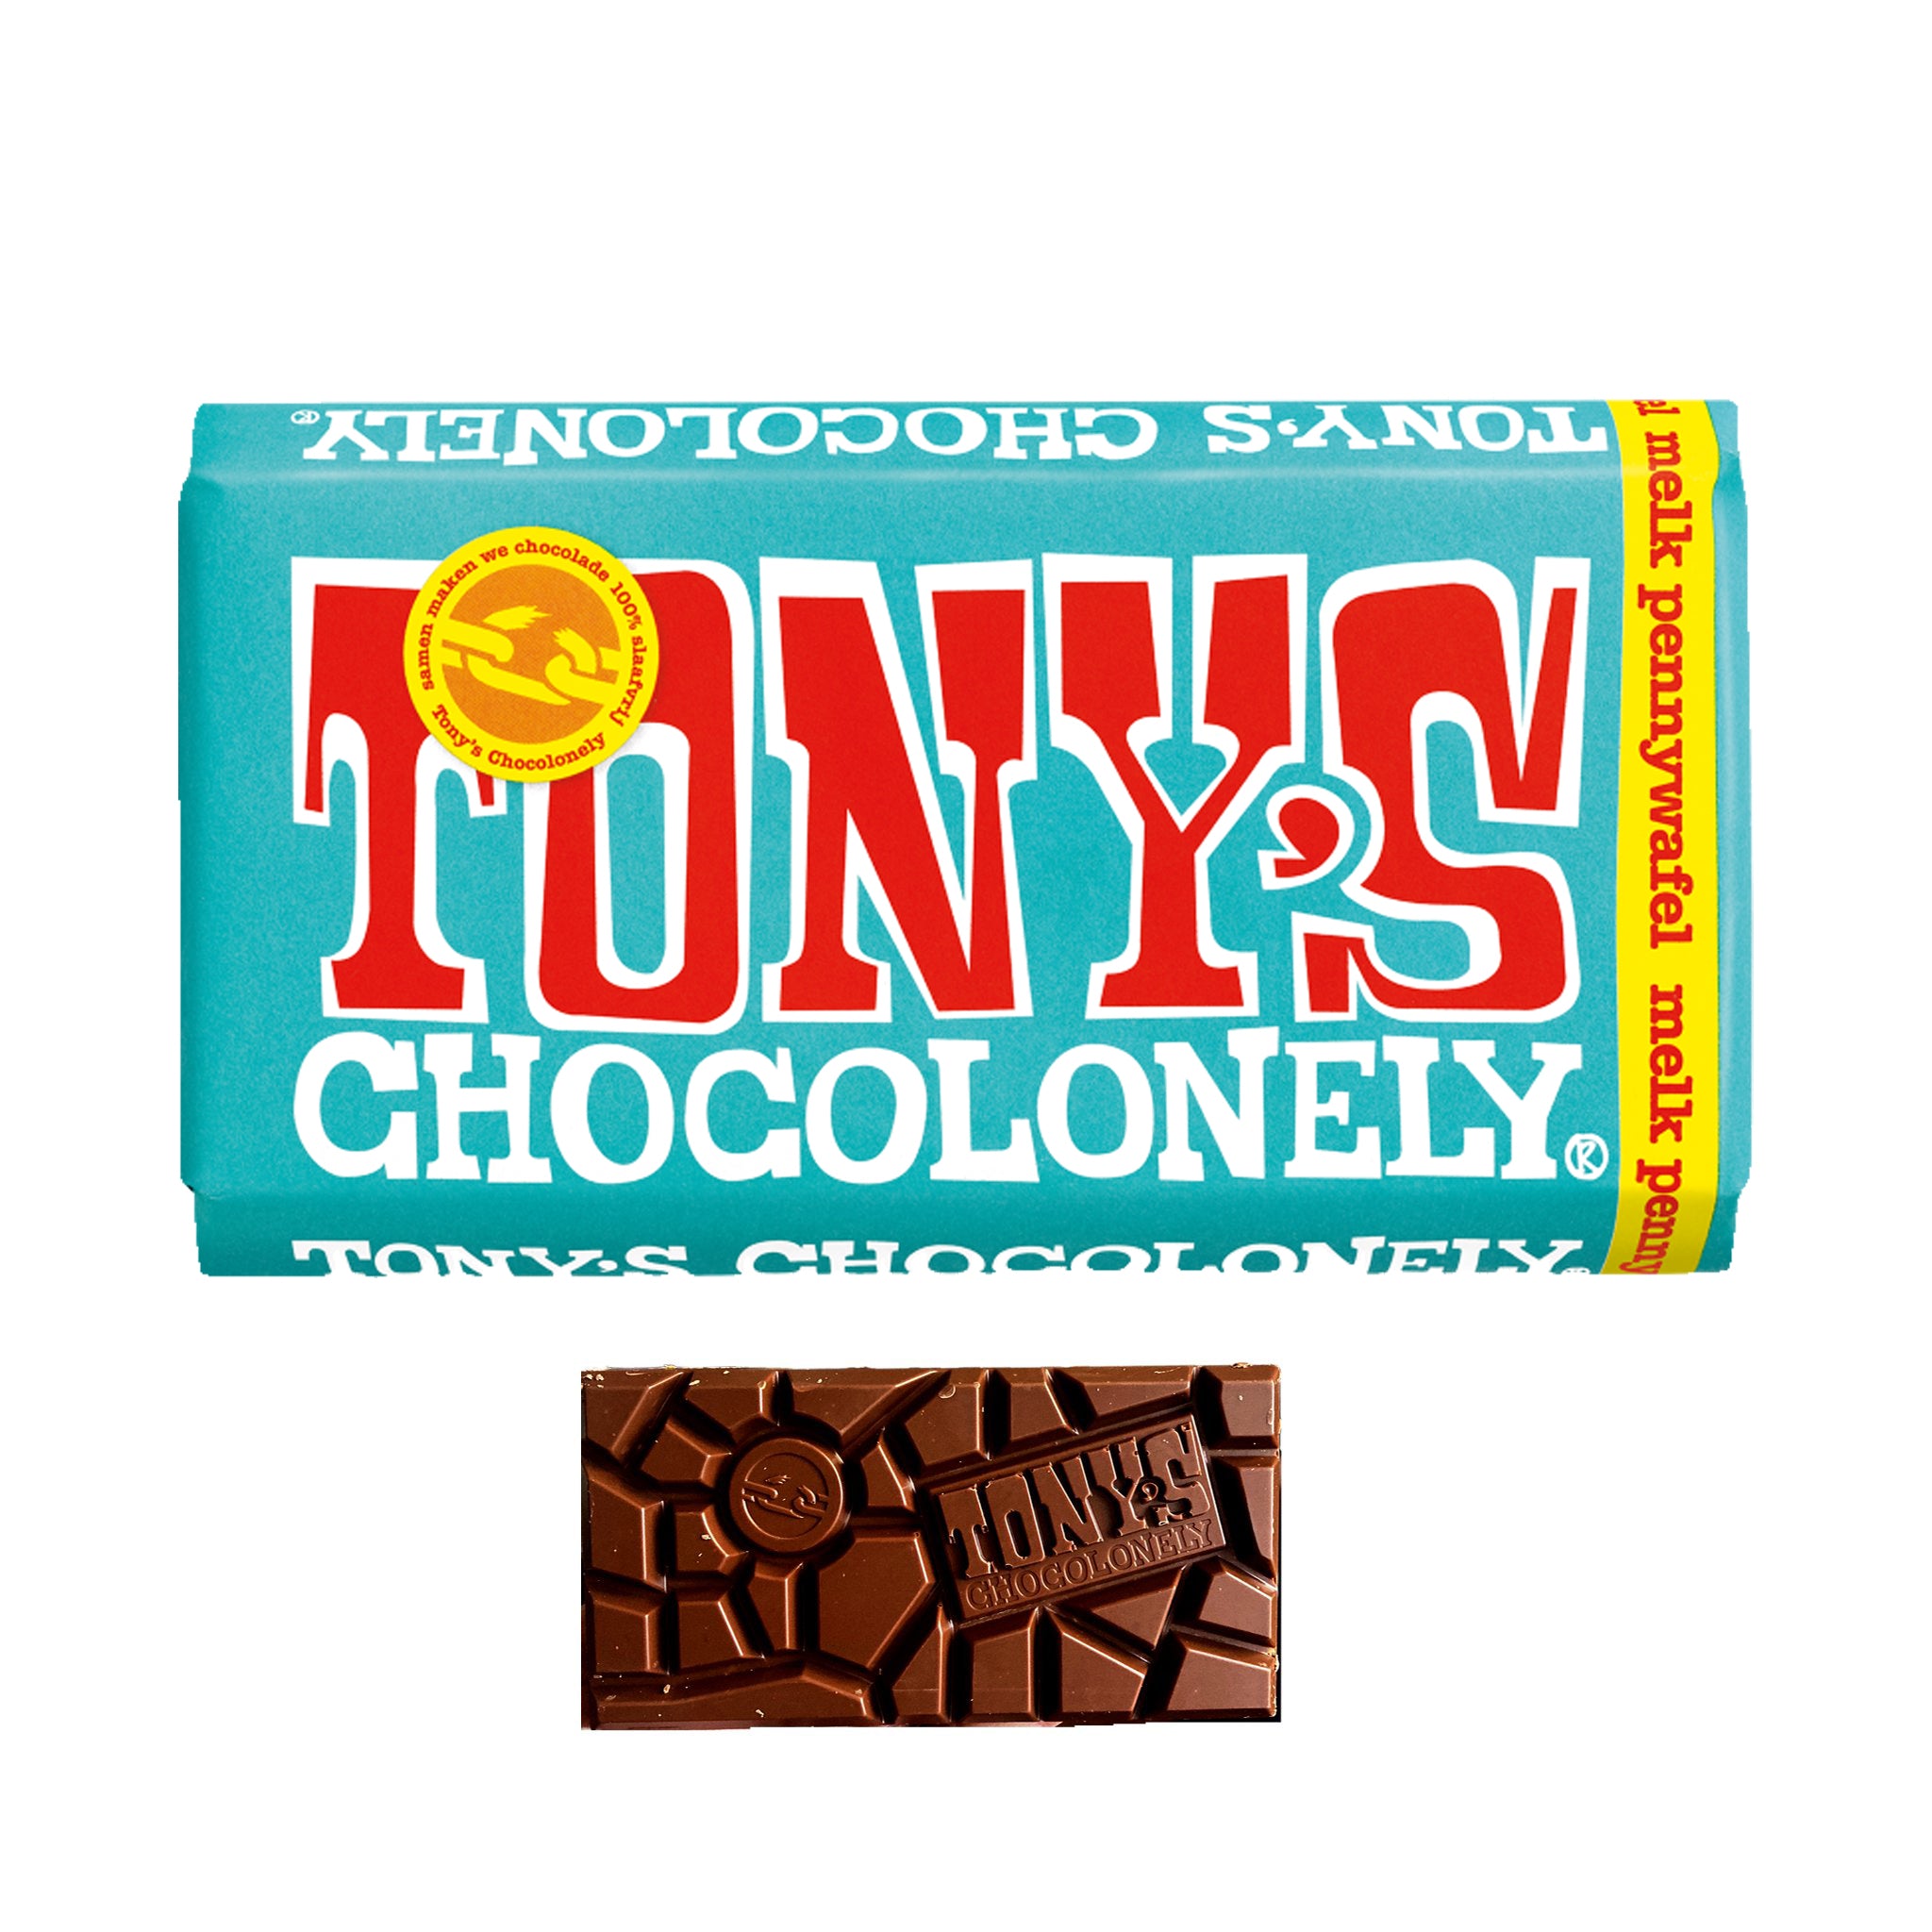 Tony's Pennywafel שוקולד טוני'ס וופל ושברי עוגיות